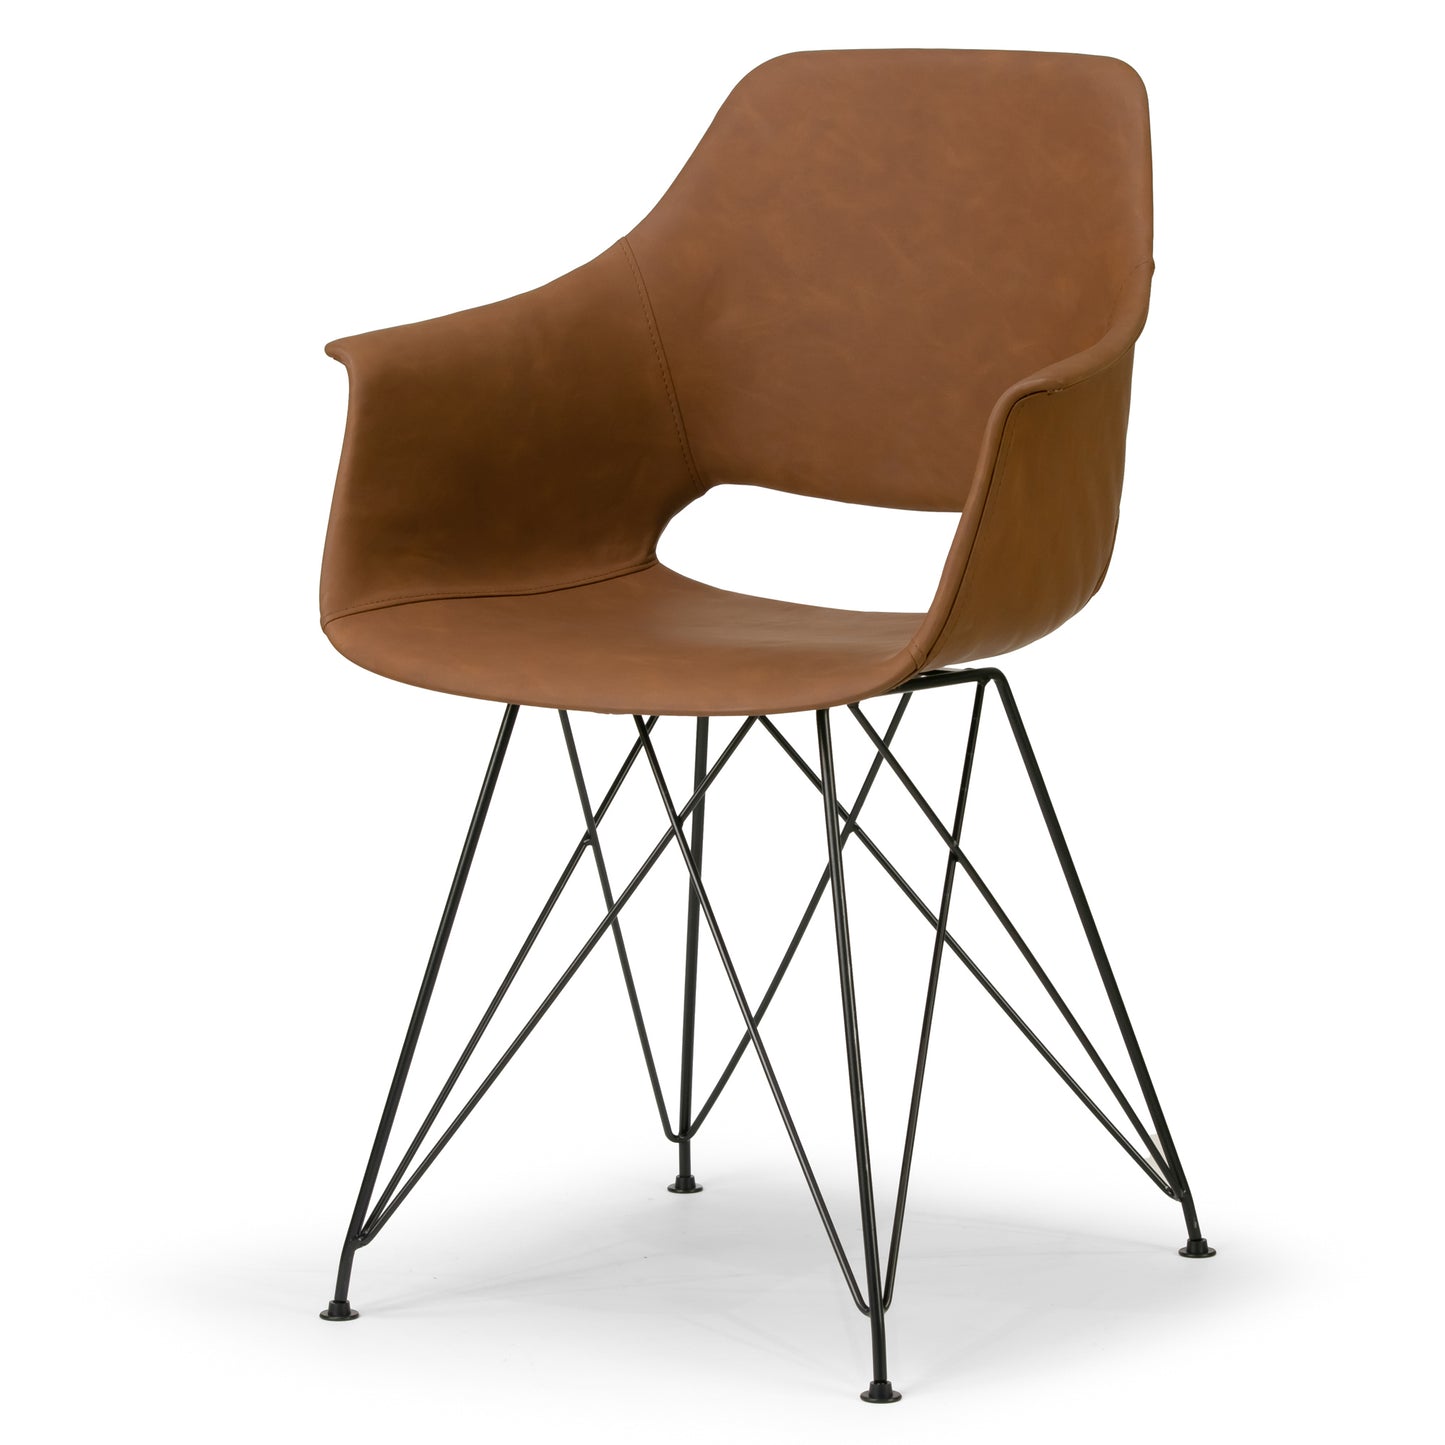 Set of 2 Alora Retro Modern Caramel Brown Arm Chair with Black Steel Legs